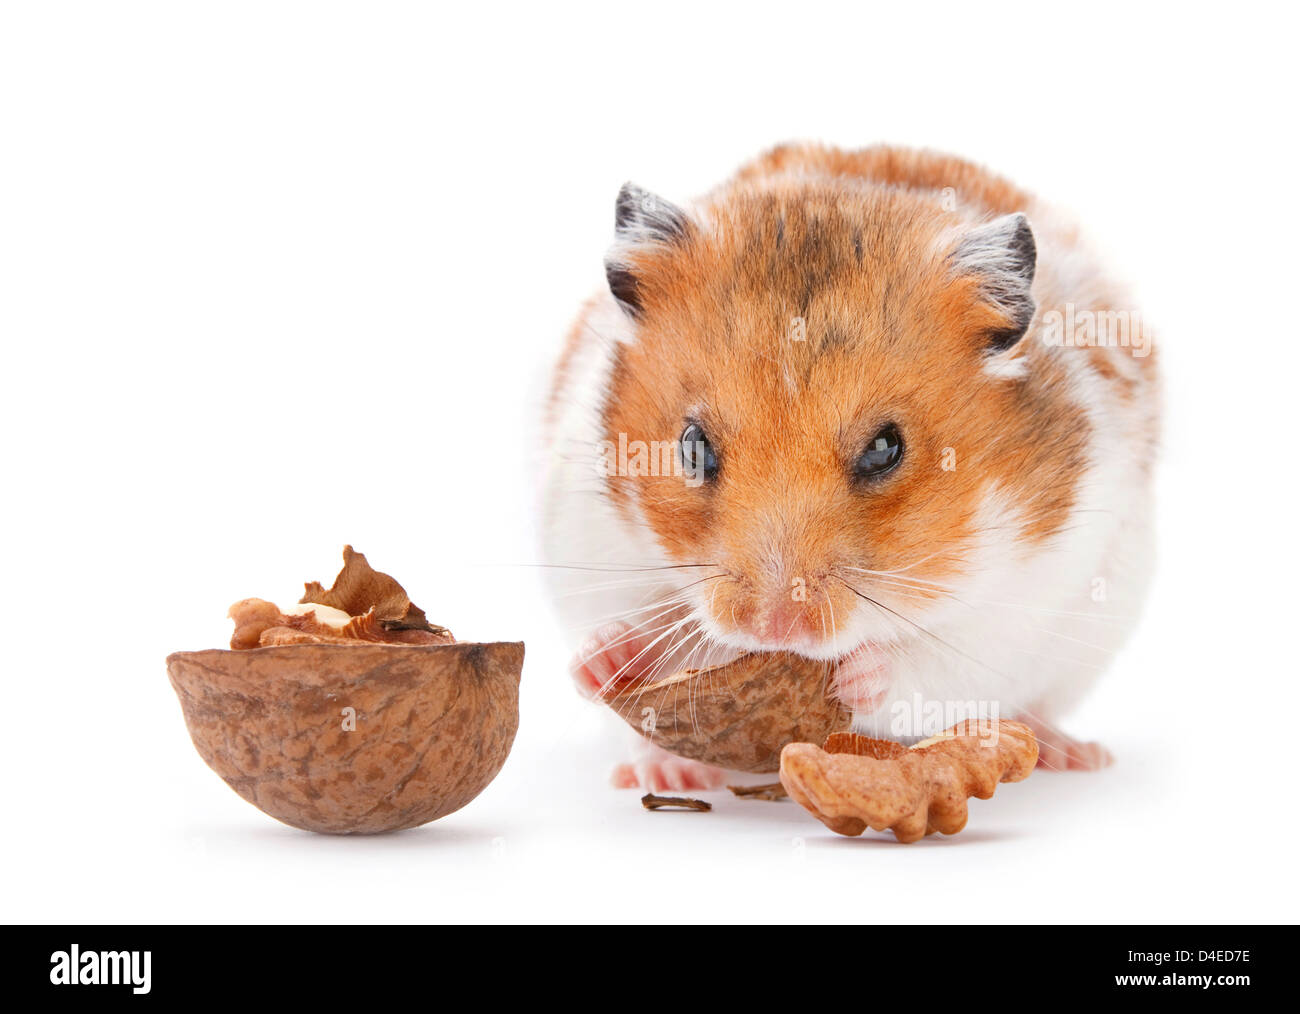 Hamster eating walnut on white Stock Photo